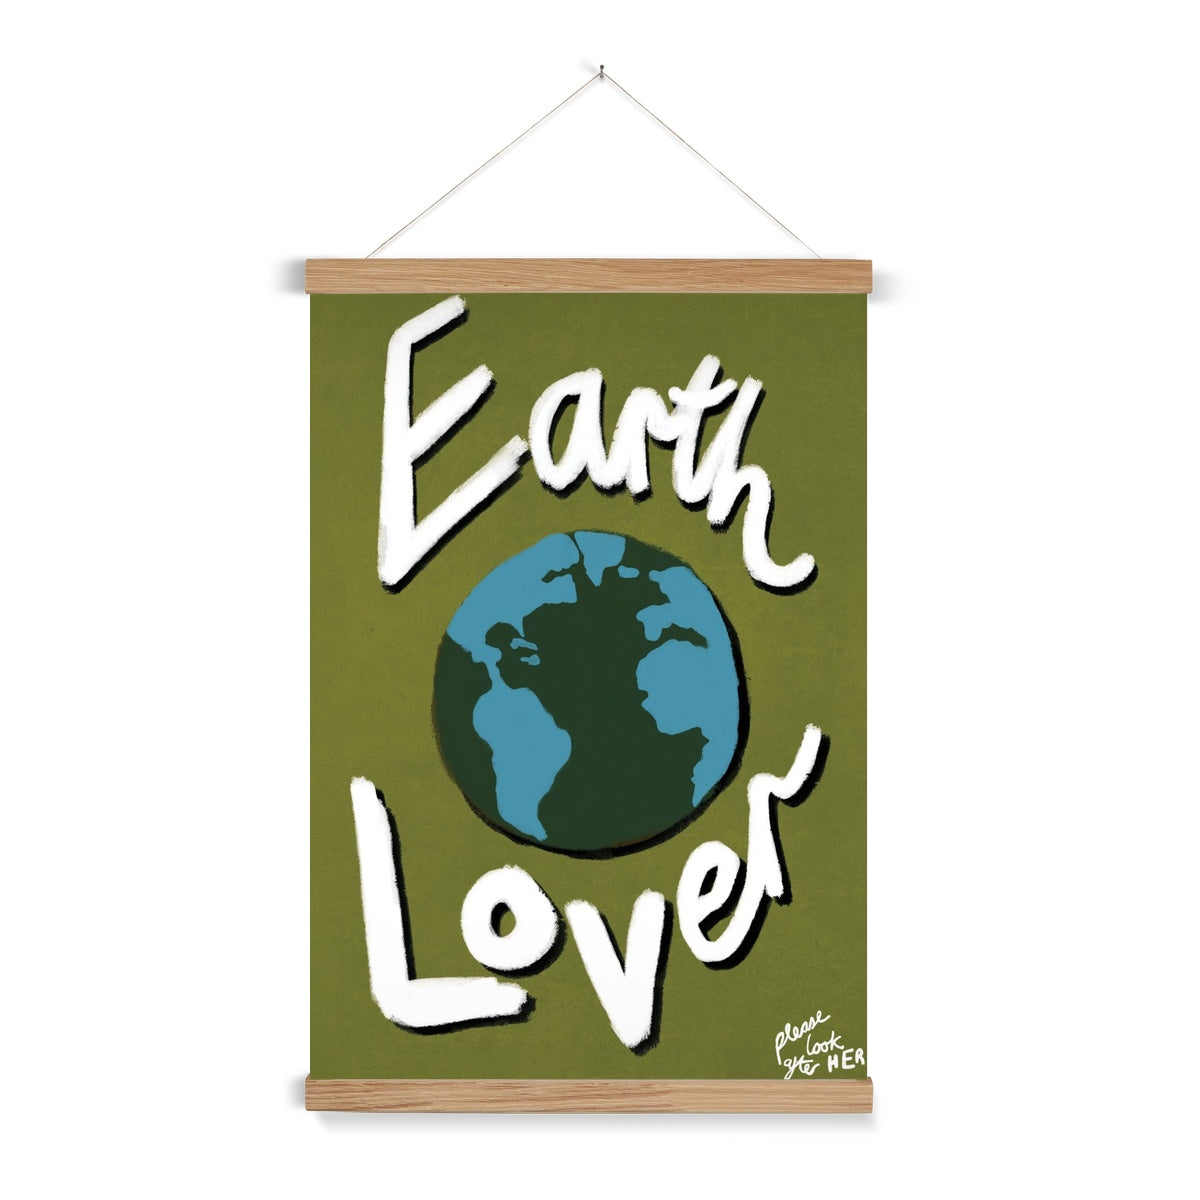 Earth Lover Print - Olive Green, Blue, White Fine Art Print with Hanger